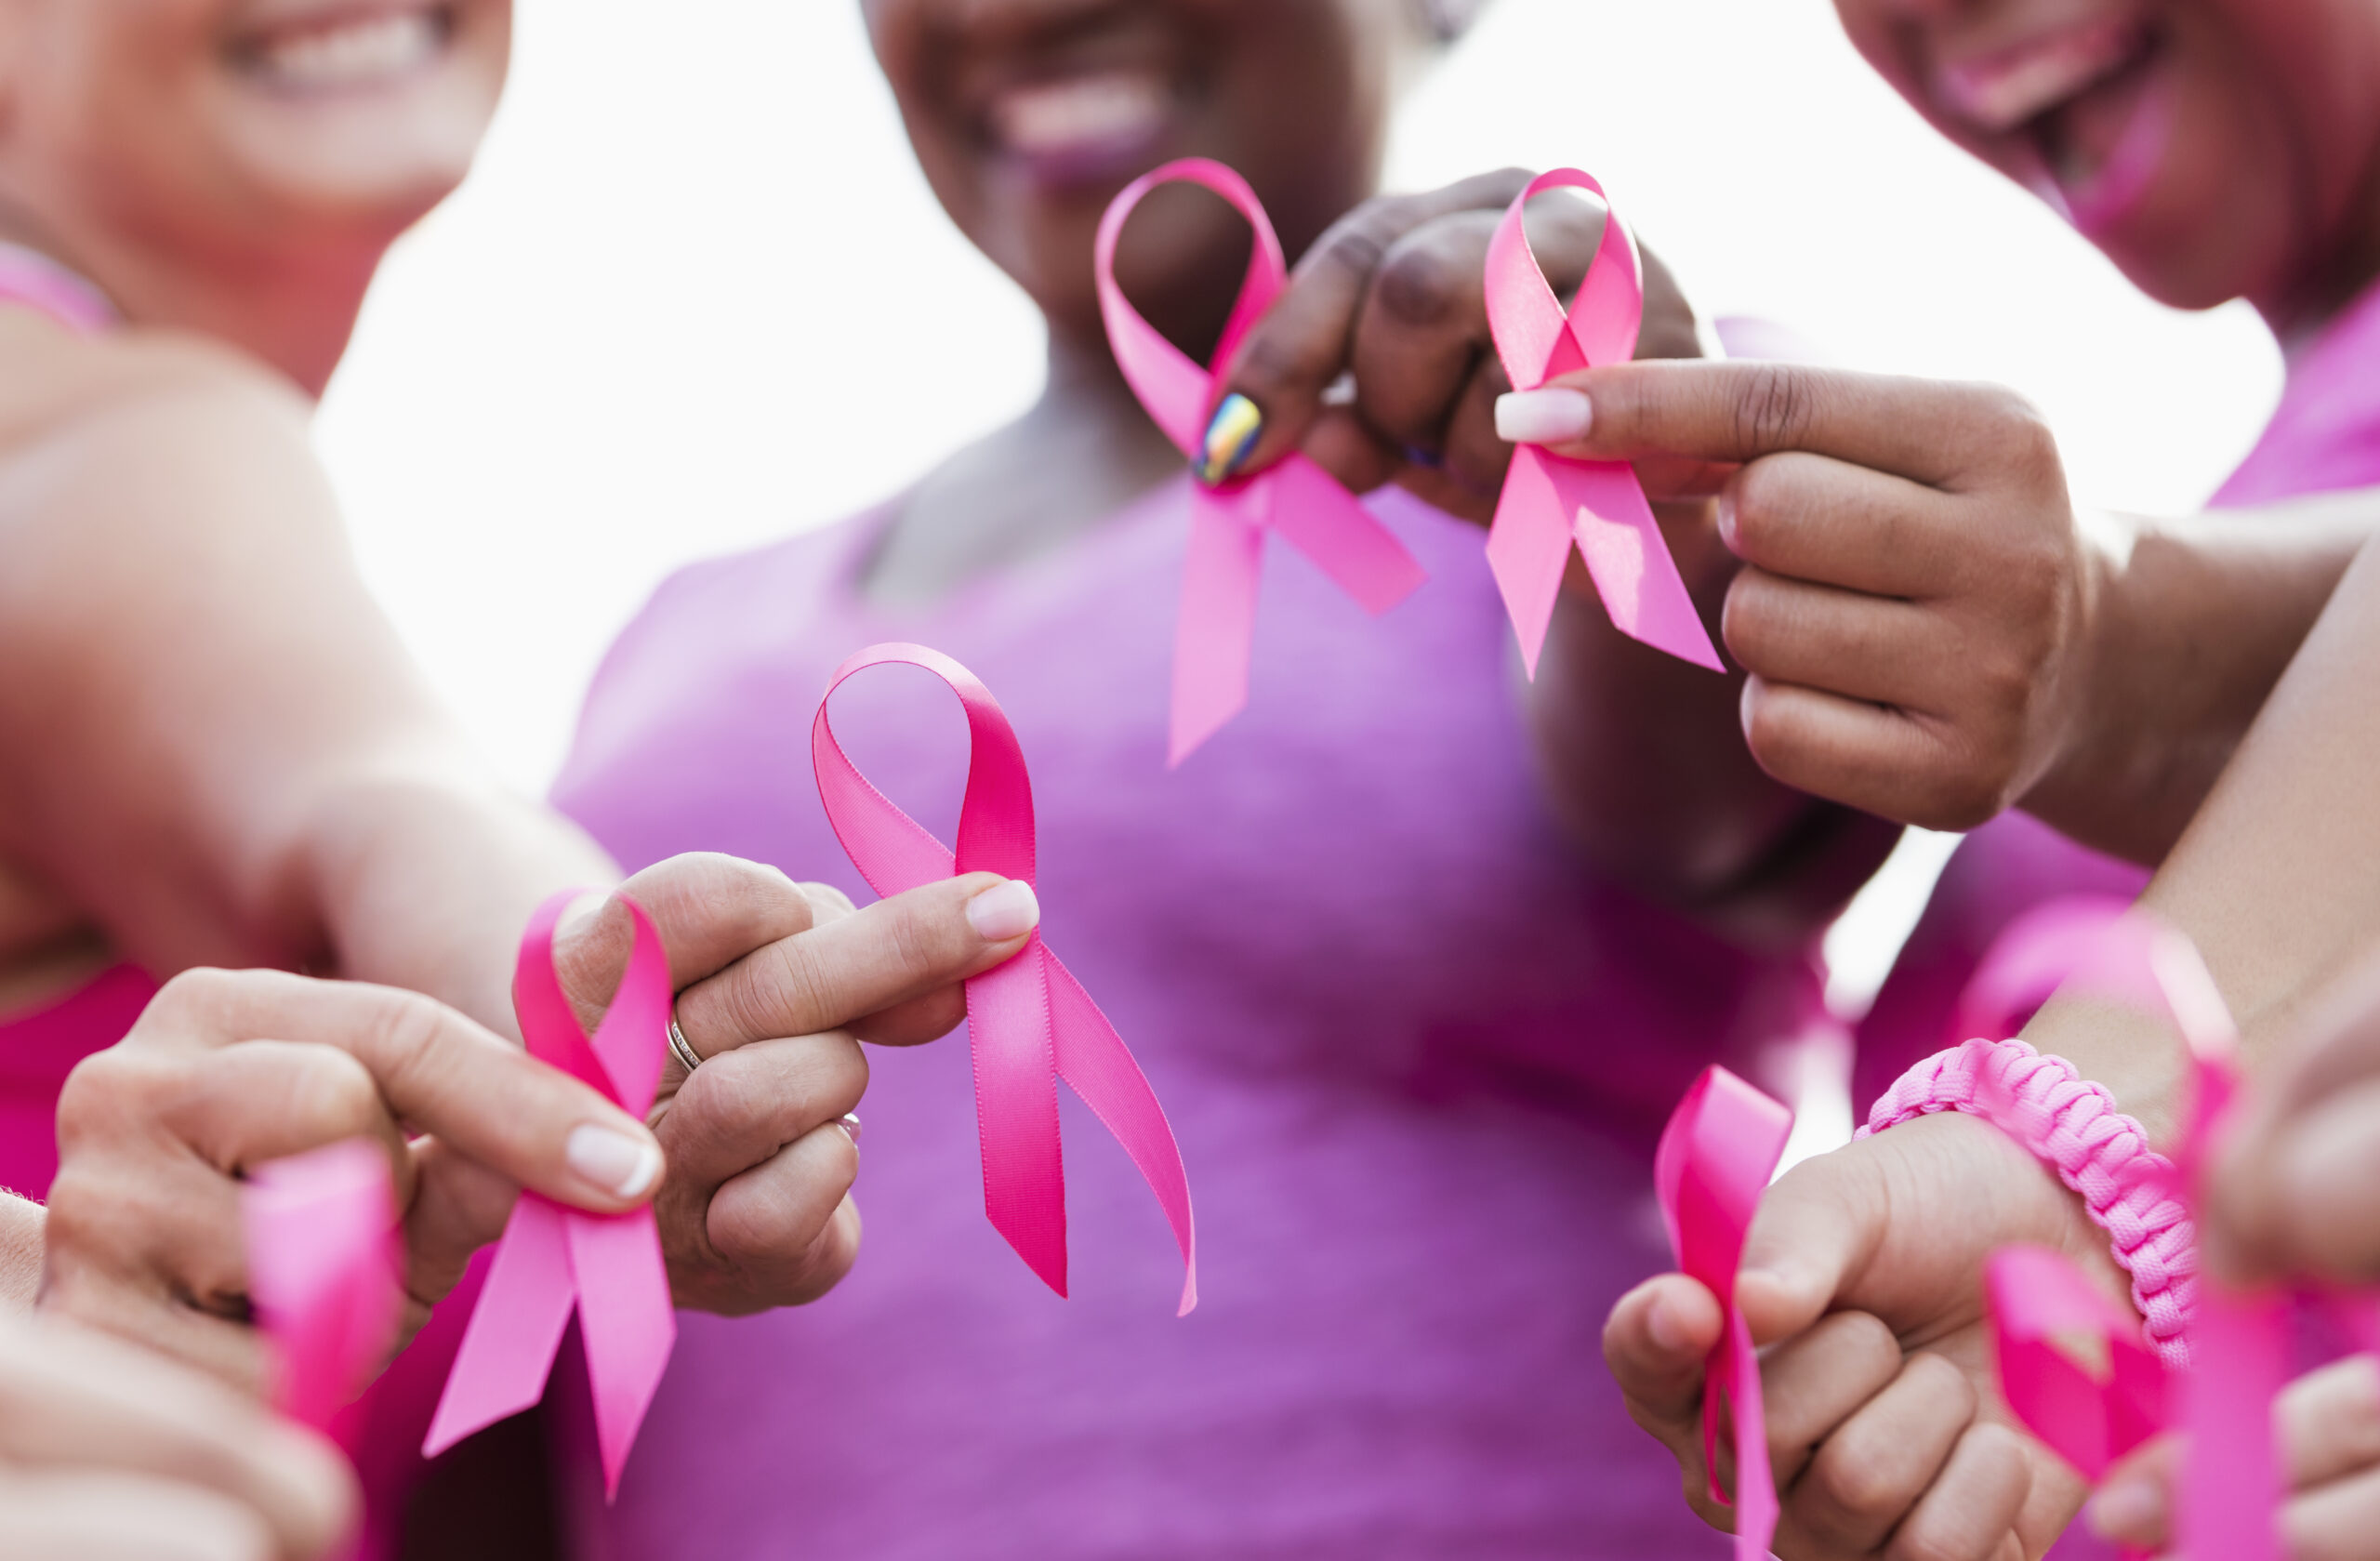 Breast Cancer Awareness Webinar